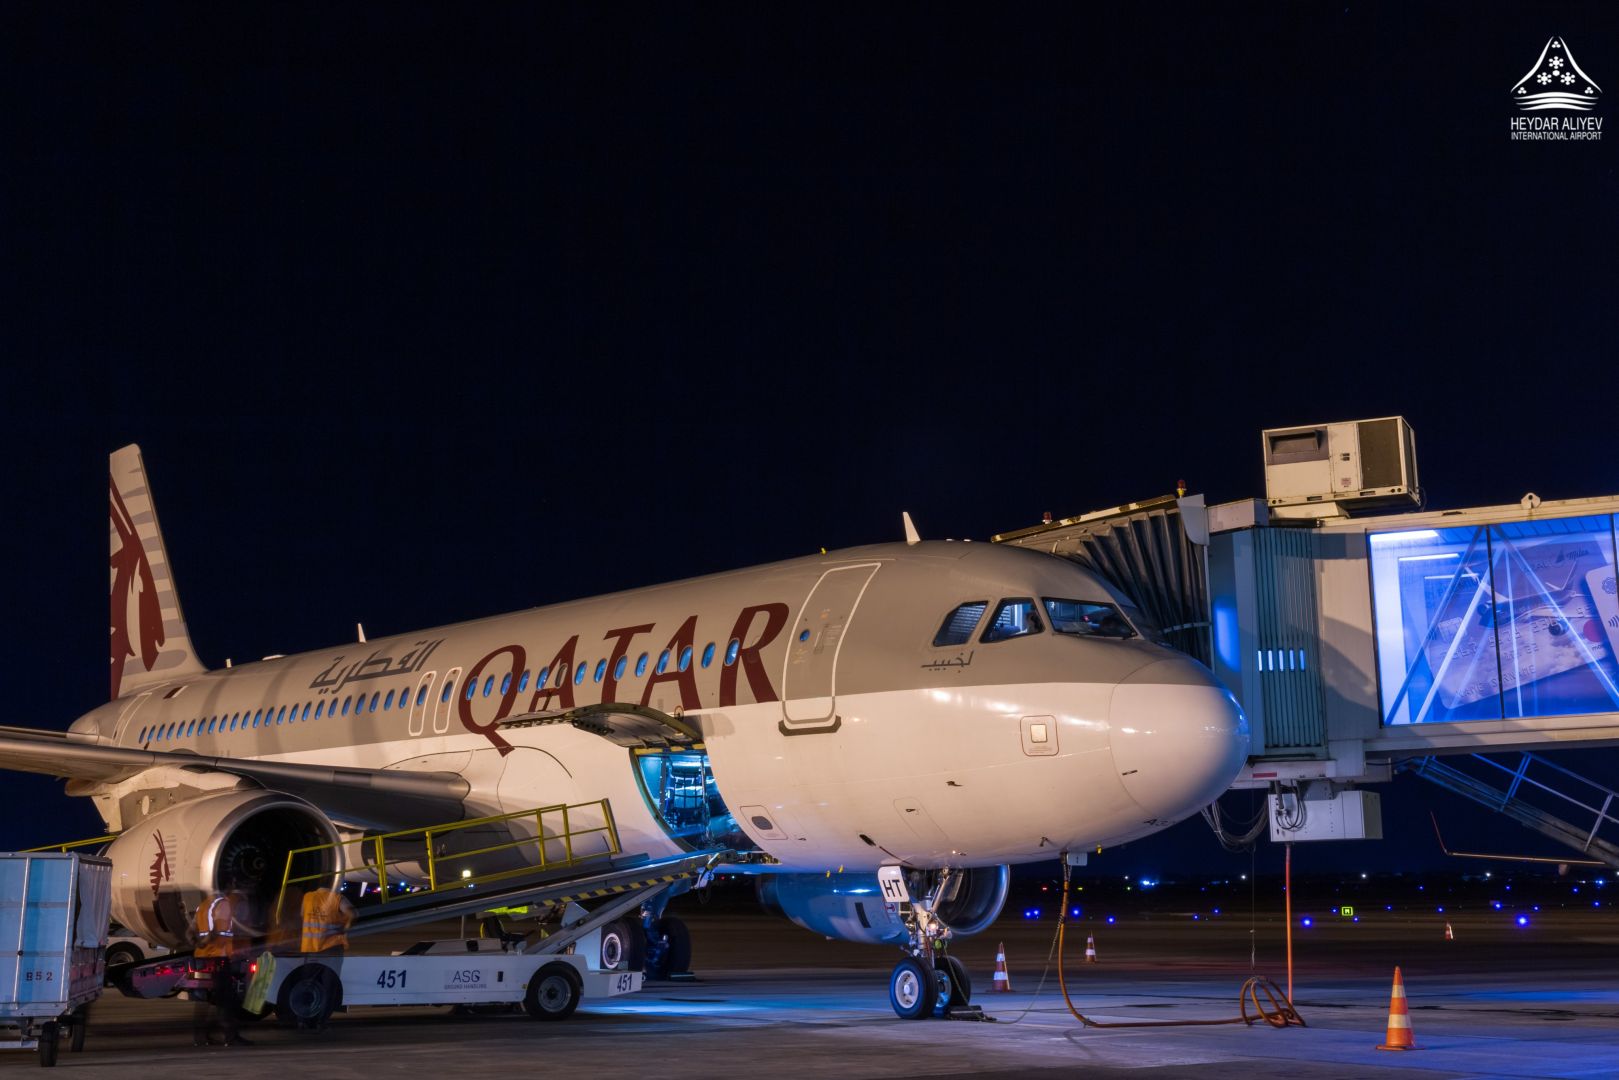 Qatar Airways meilleure compagnie aérienne de l’année 2021